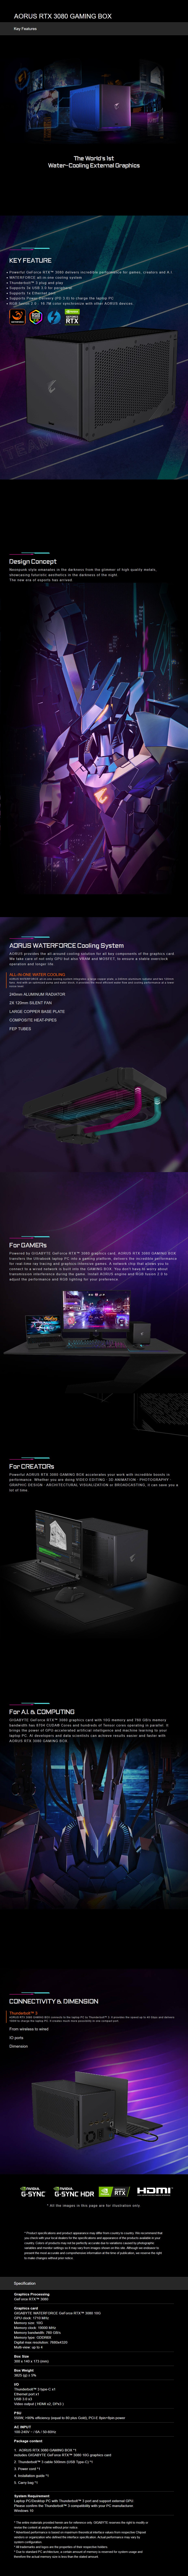 Gigabyte AORUS GeForce RTX 3080 WATERFORCE 10GB Gaming Box - Desktop Overview 1